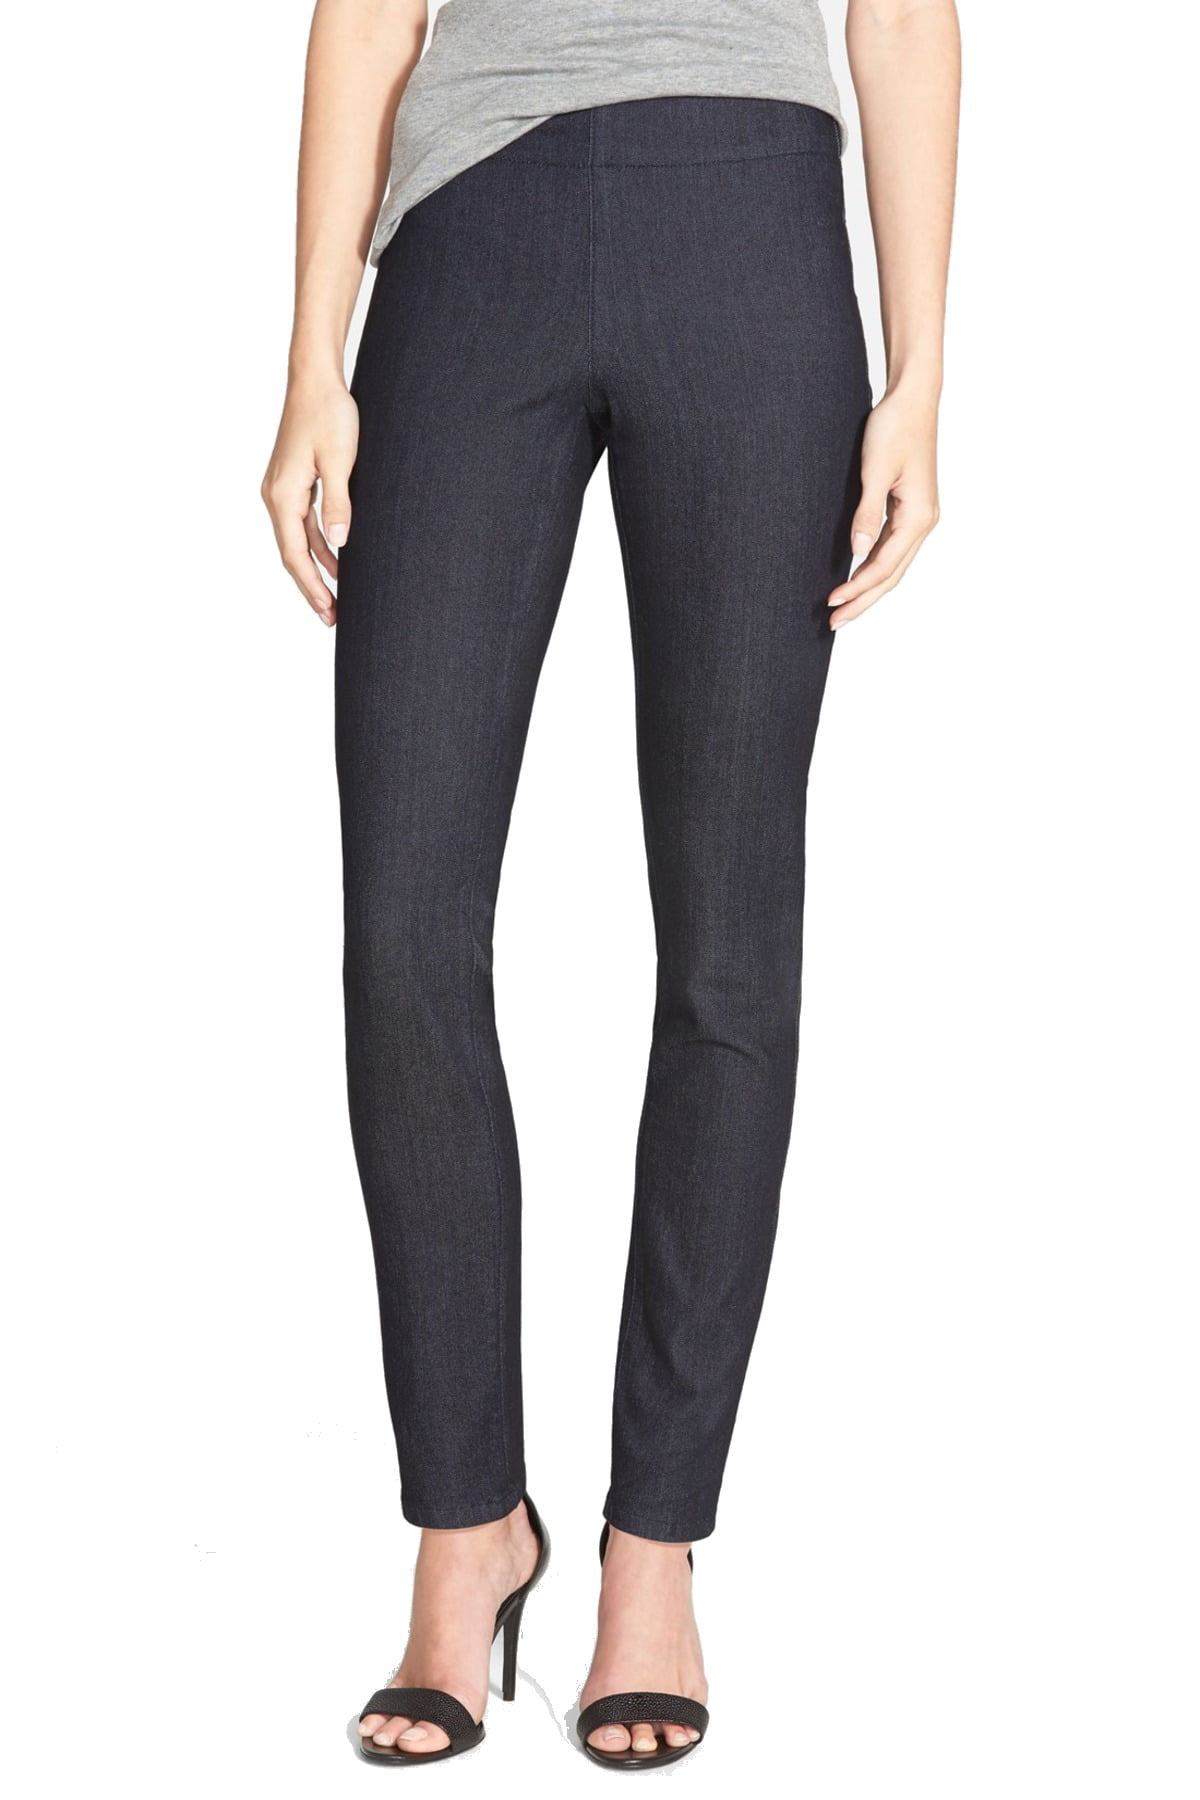 NYDJ - Women's Jeans Pull-On Jeggings Mid-Rise Stretch 14 - Walmart.com ...